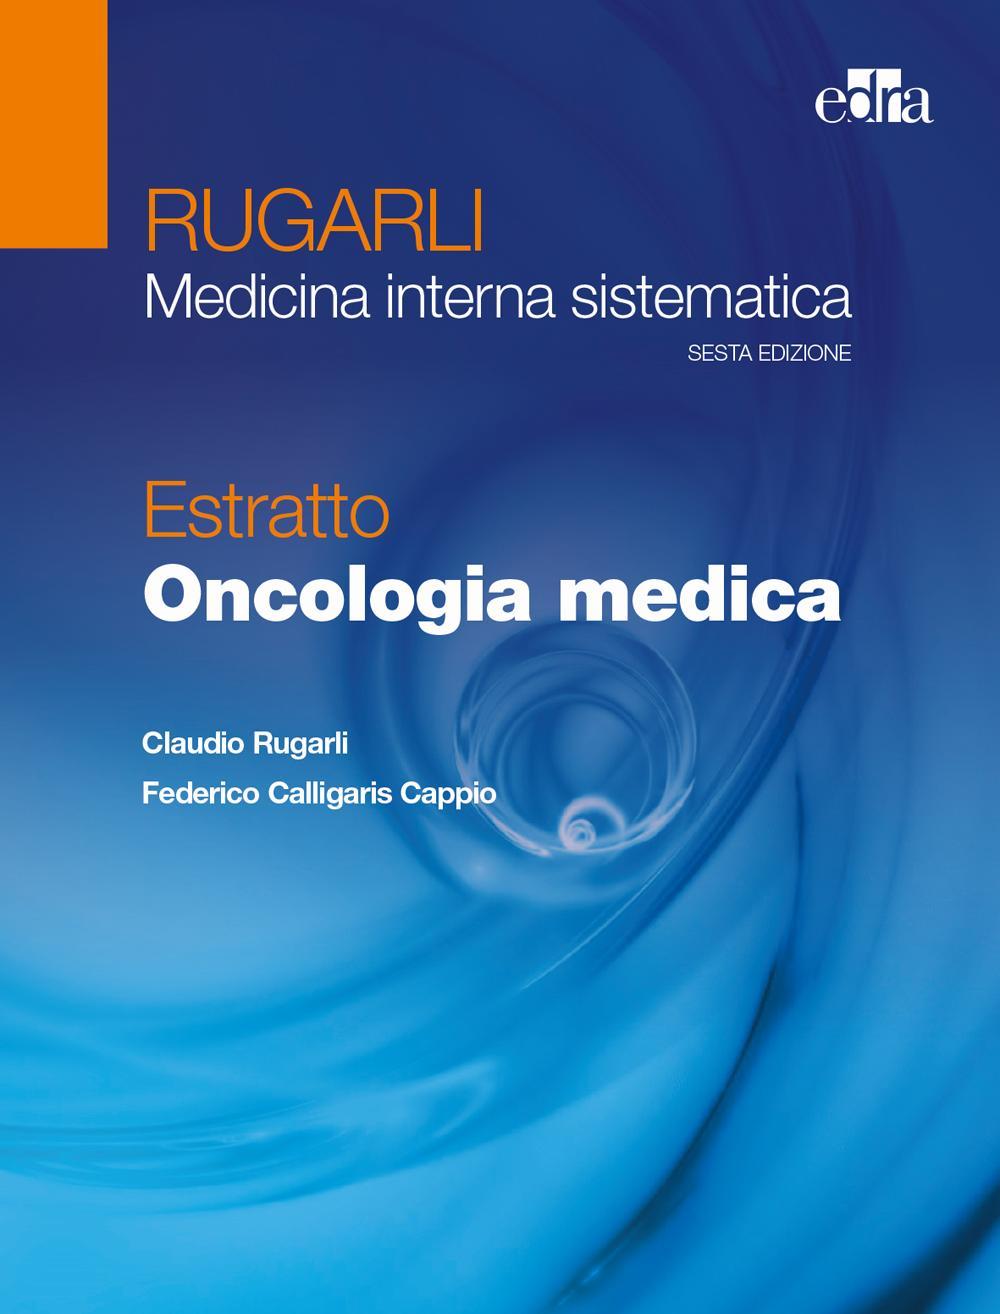 Kniha Rugarli. Medicina interna sistematica. Estratto: Oncologia medica Claudio Rugarli